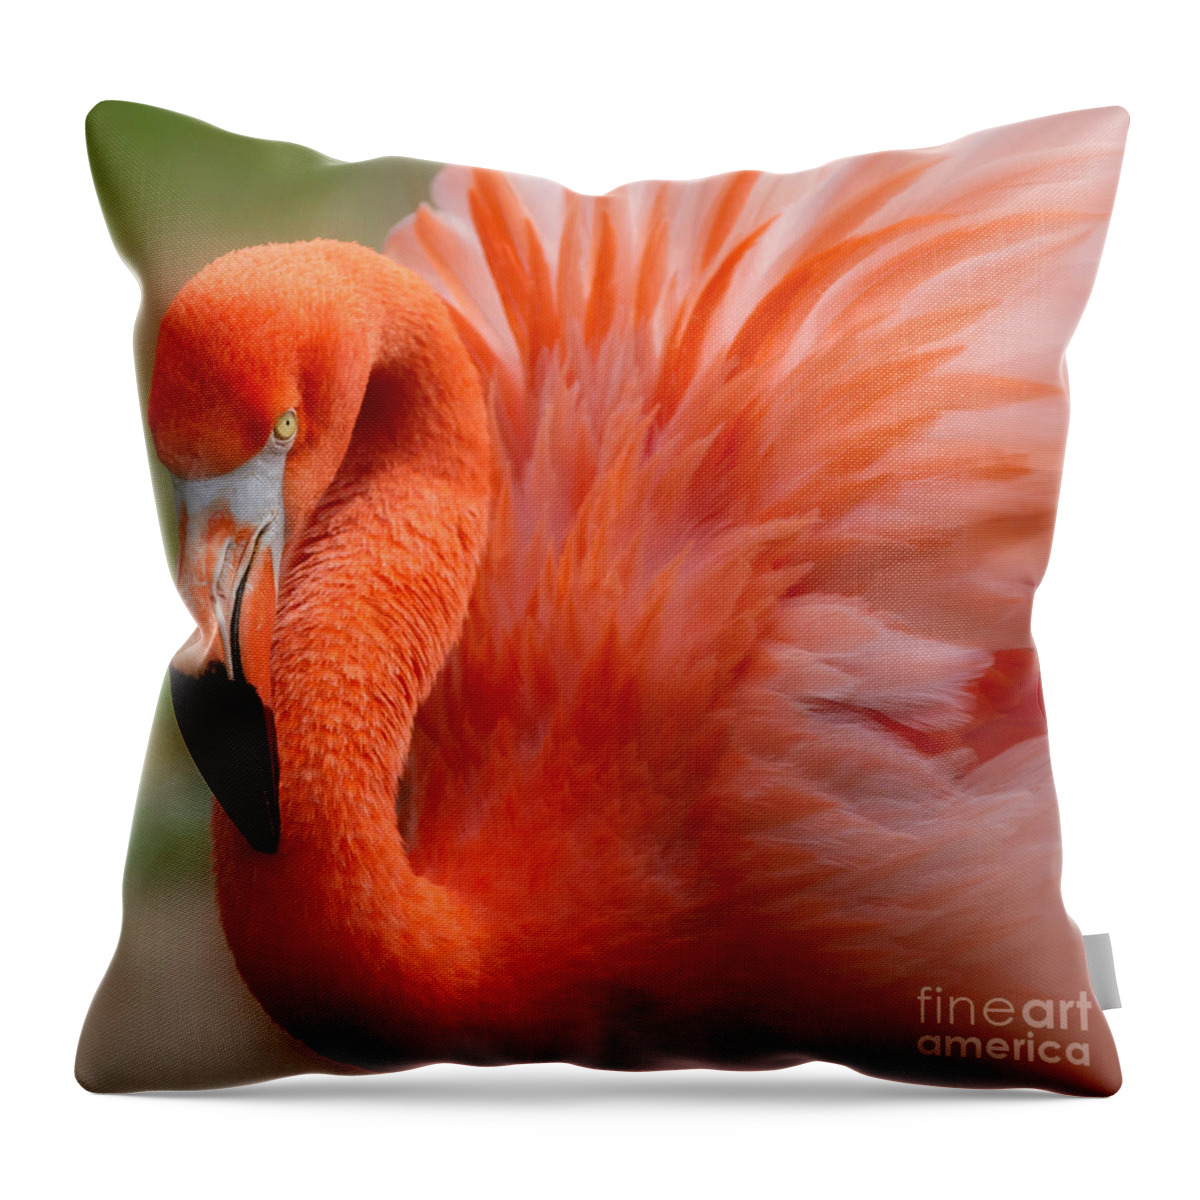 Caribbean Flamingo Throw Pillow featuring the photograph Caribbean Flamingo by Chris Scroggins